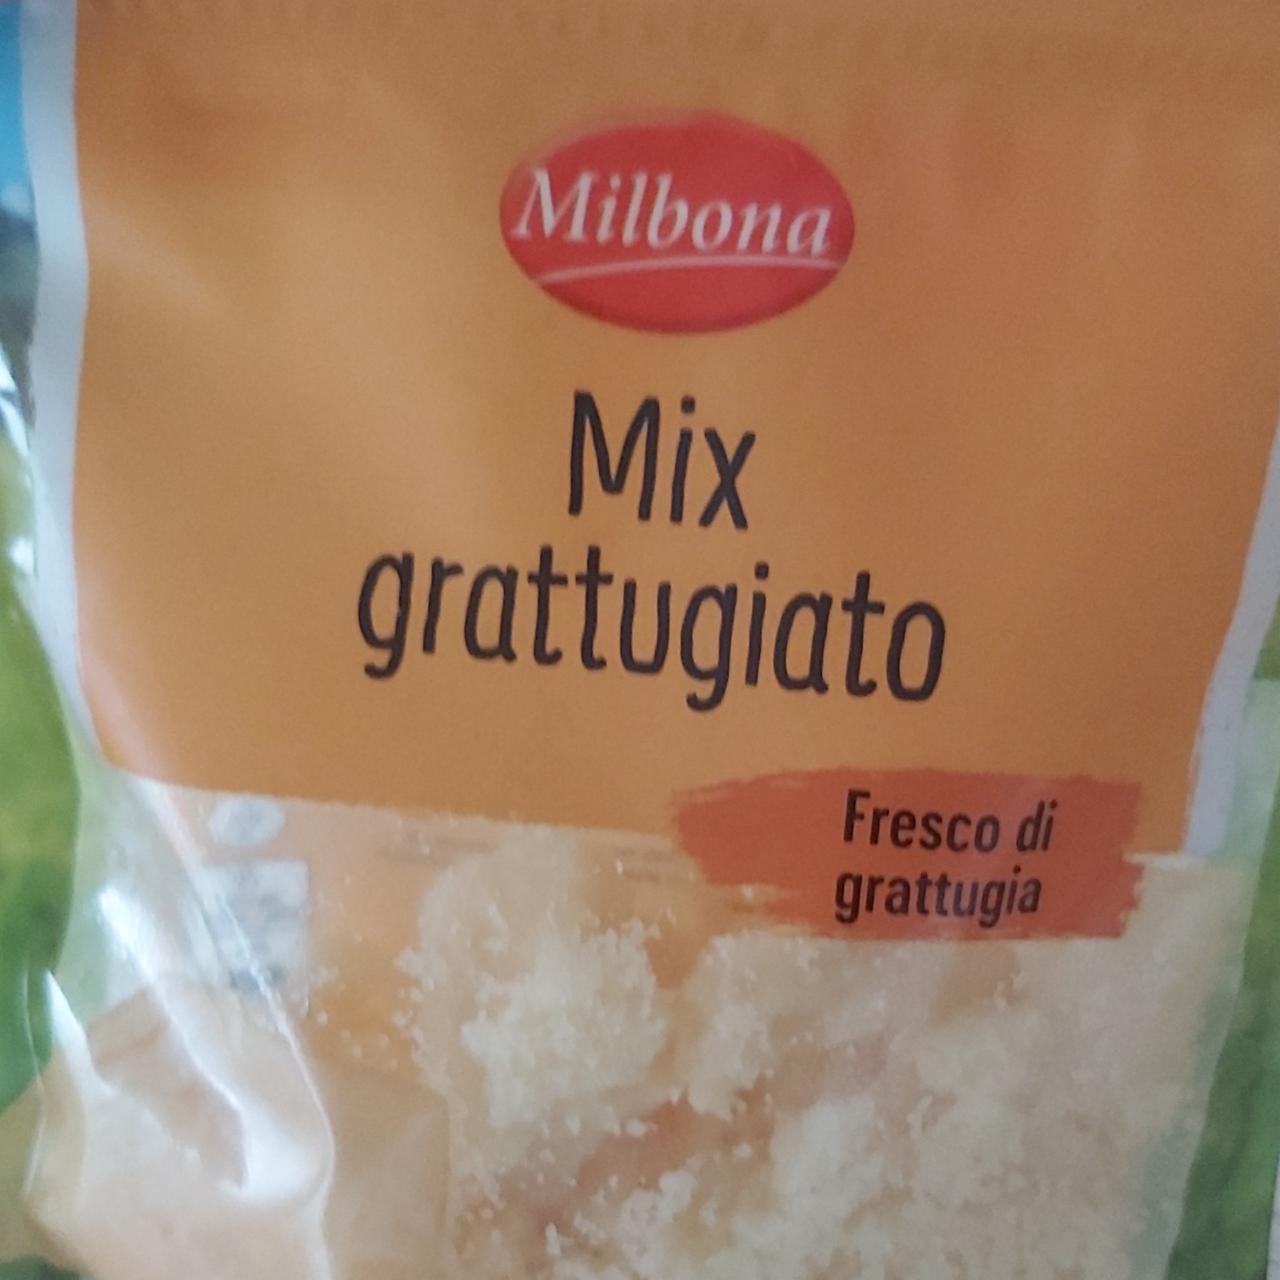 Fotografie - Mix grattugiato Milbona